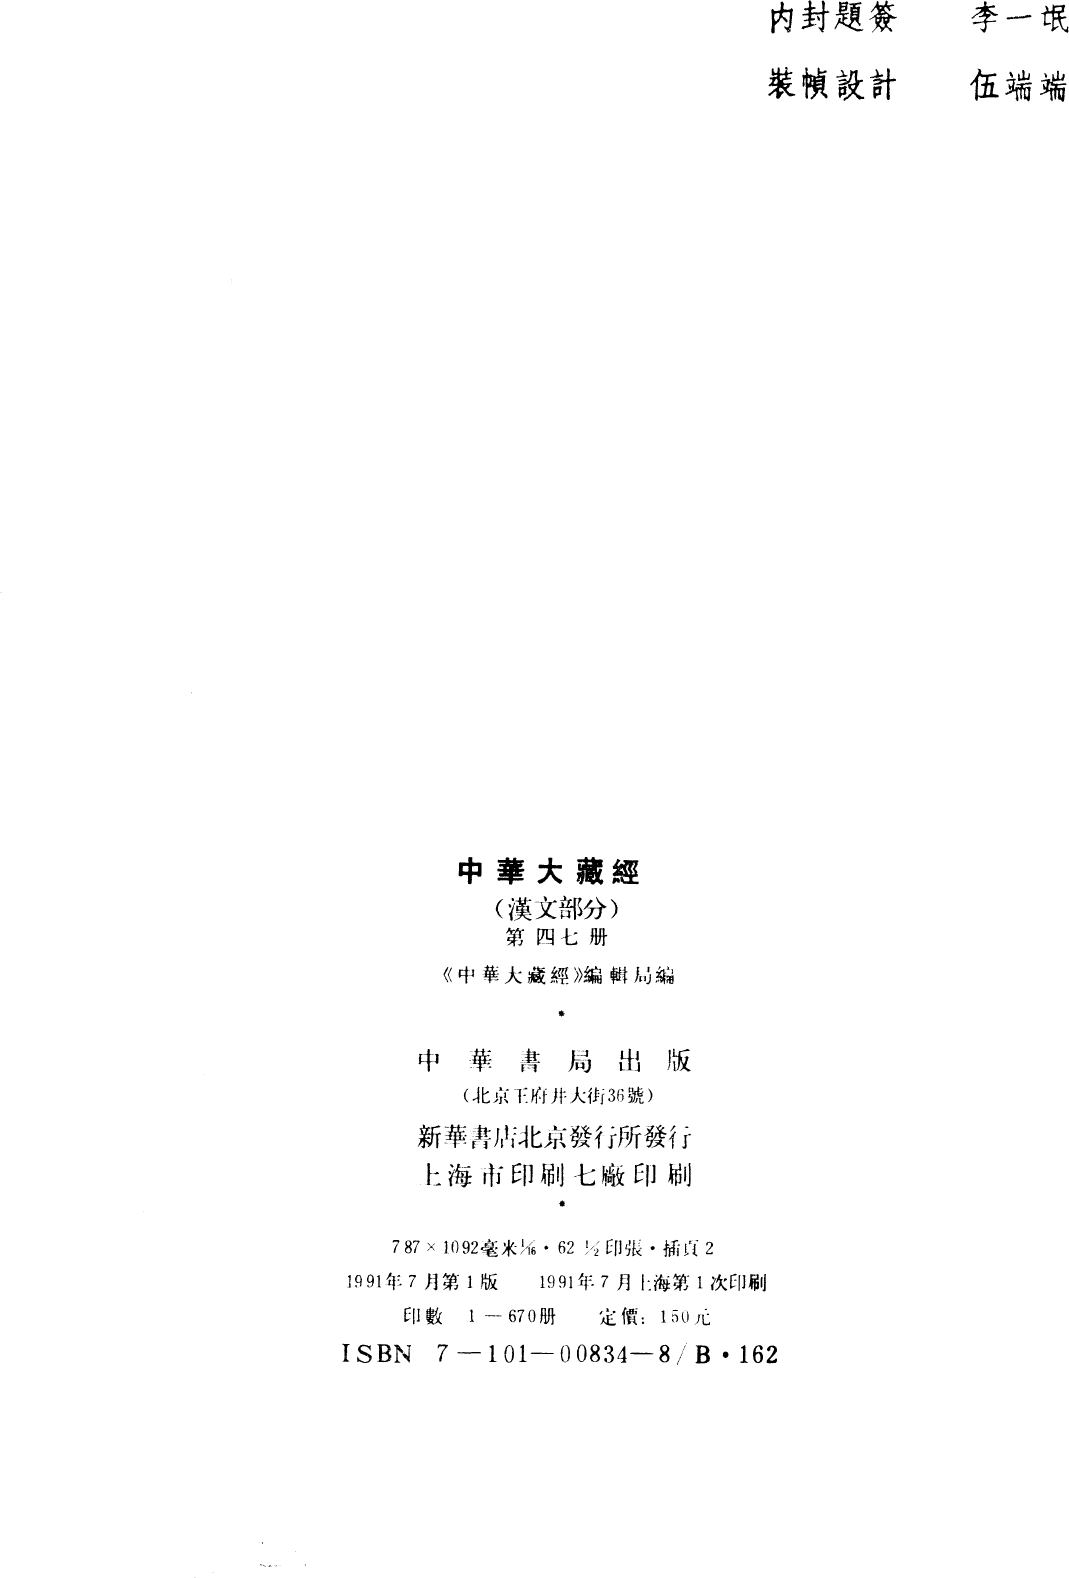 File:《中華大藏經》 第47冊 版權頁.png